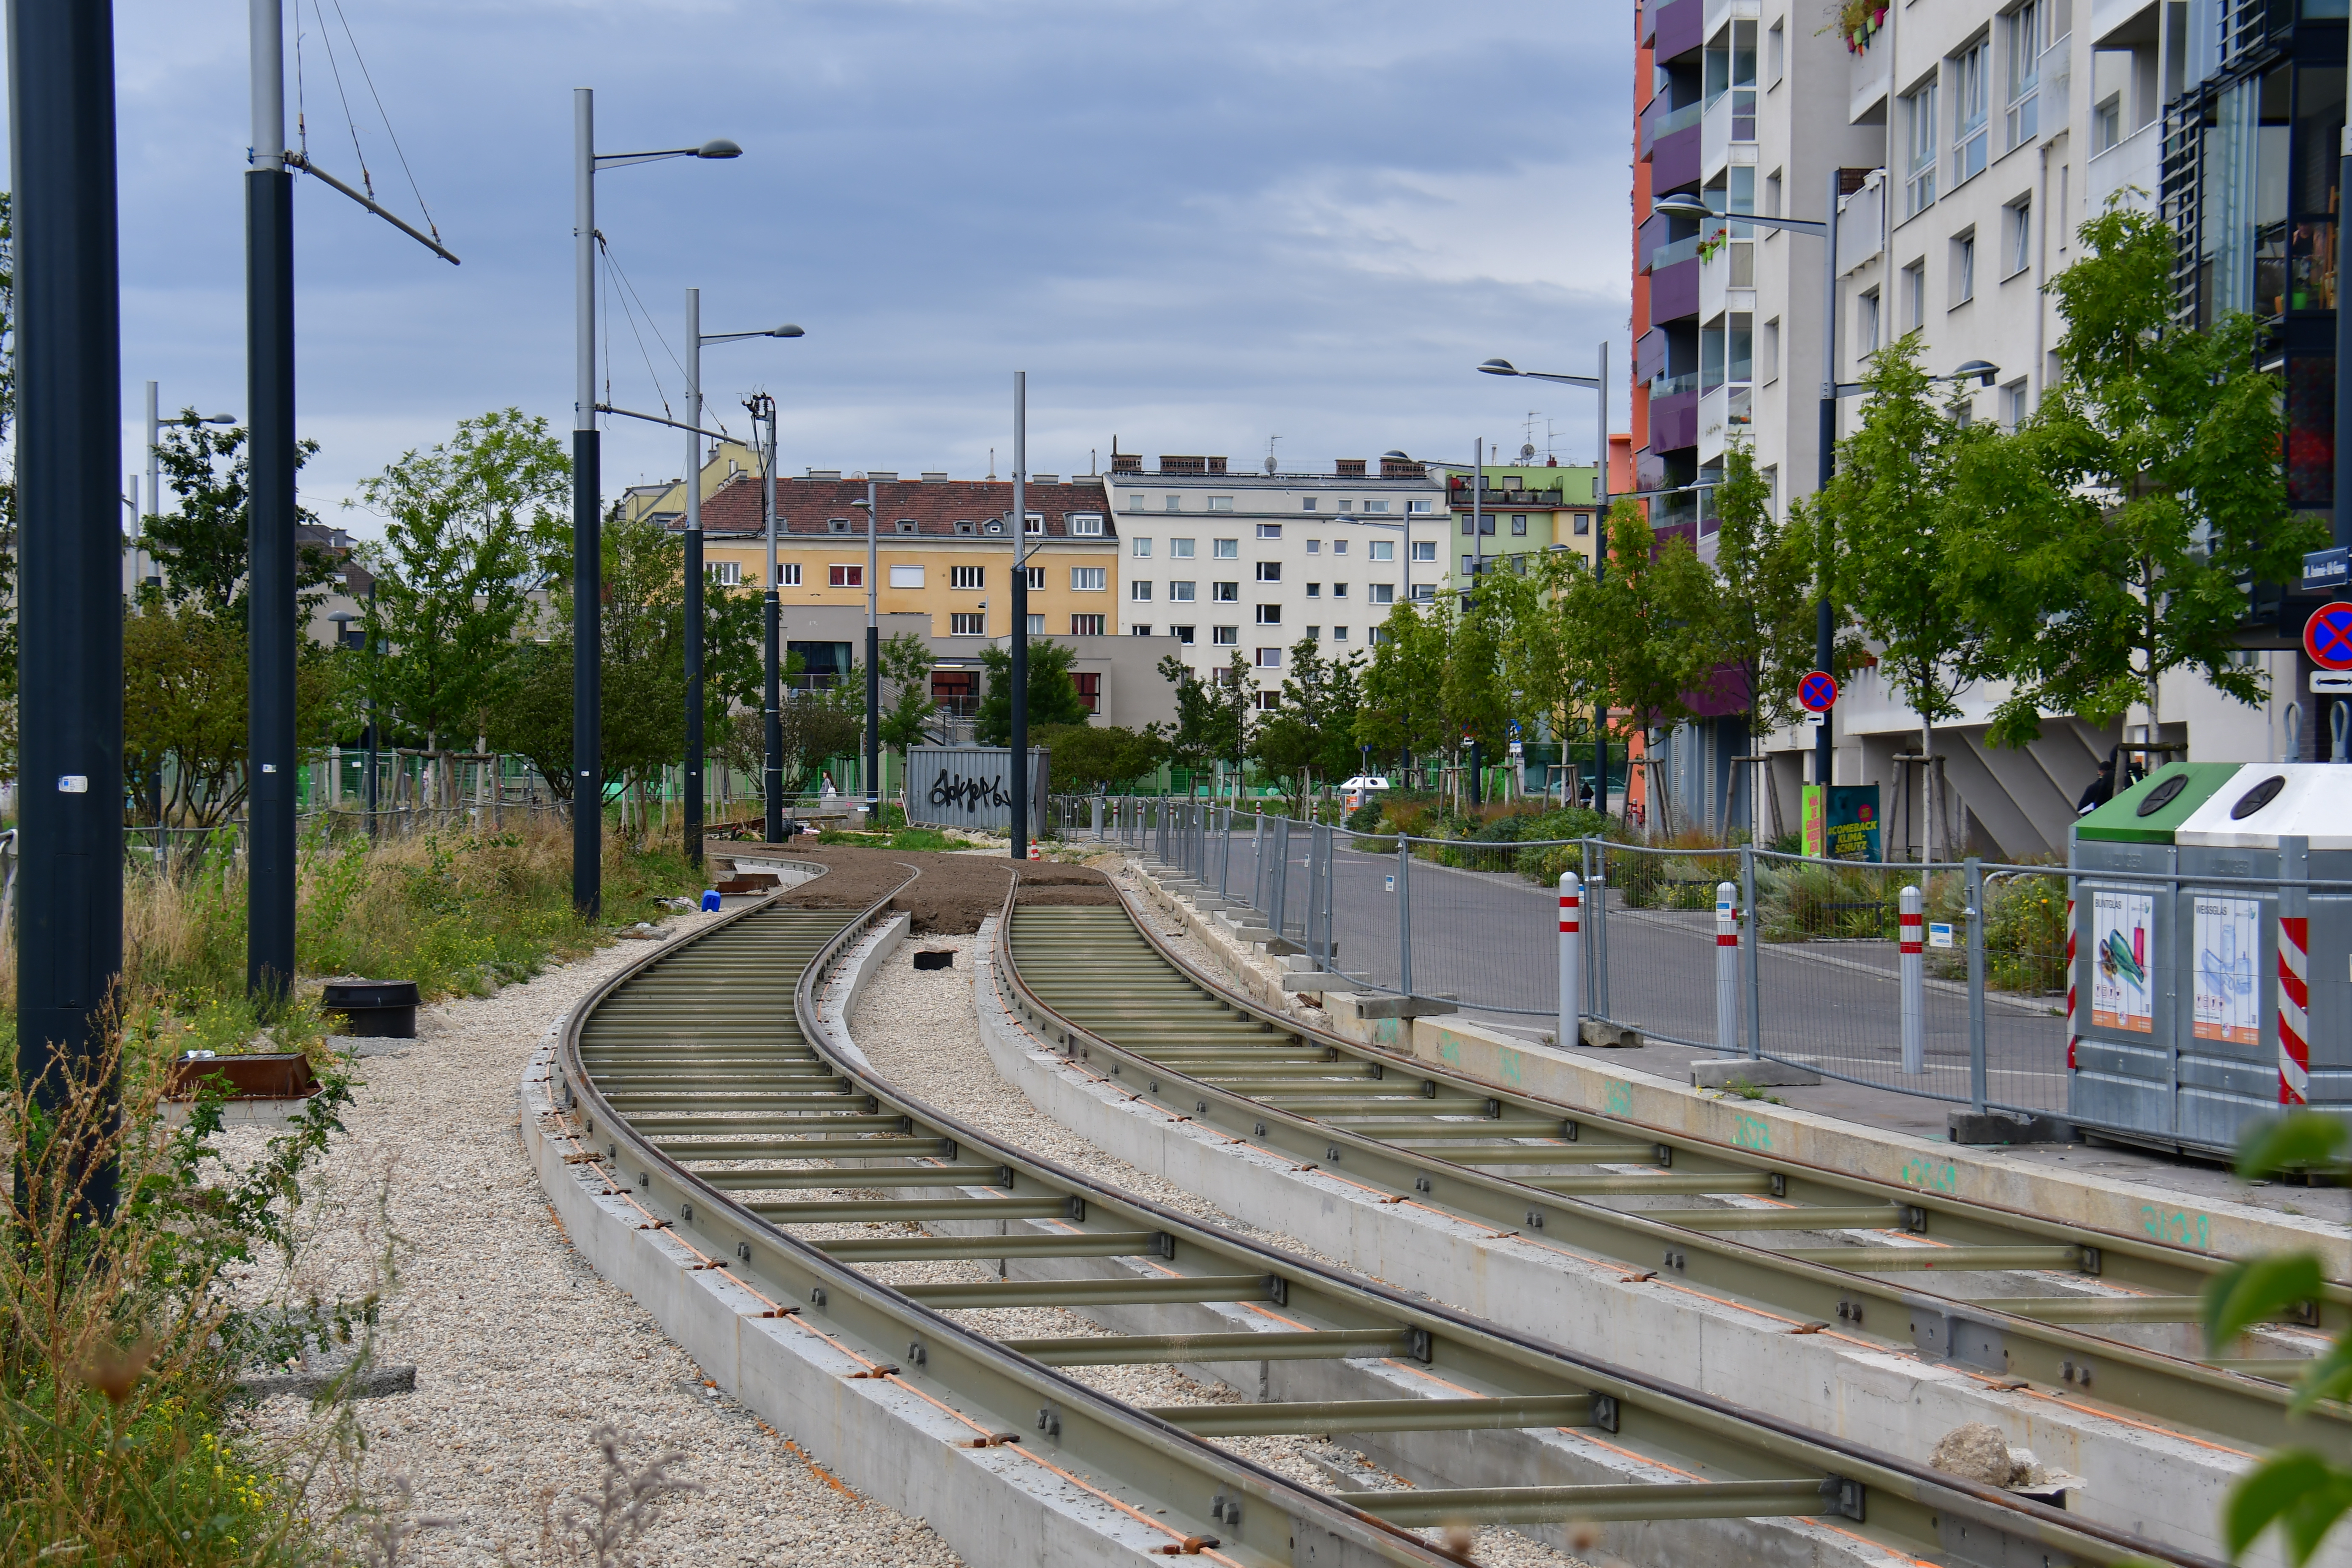 Gleisbau, Wien - Izgradnja željezničke infrastrukture